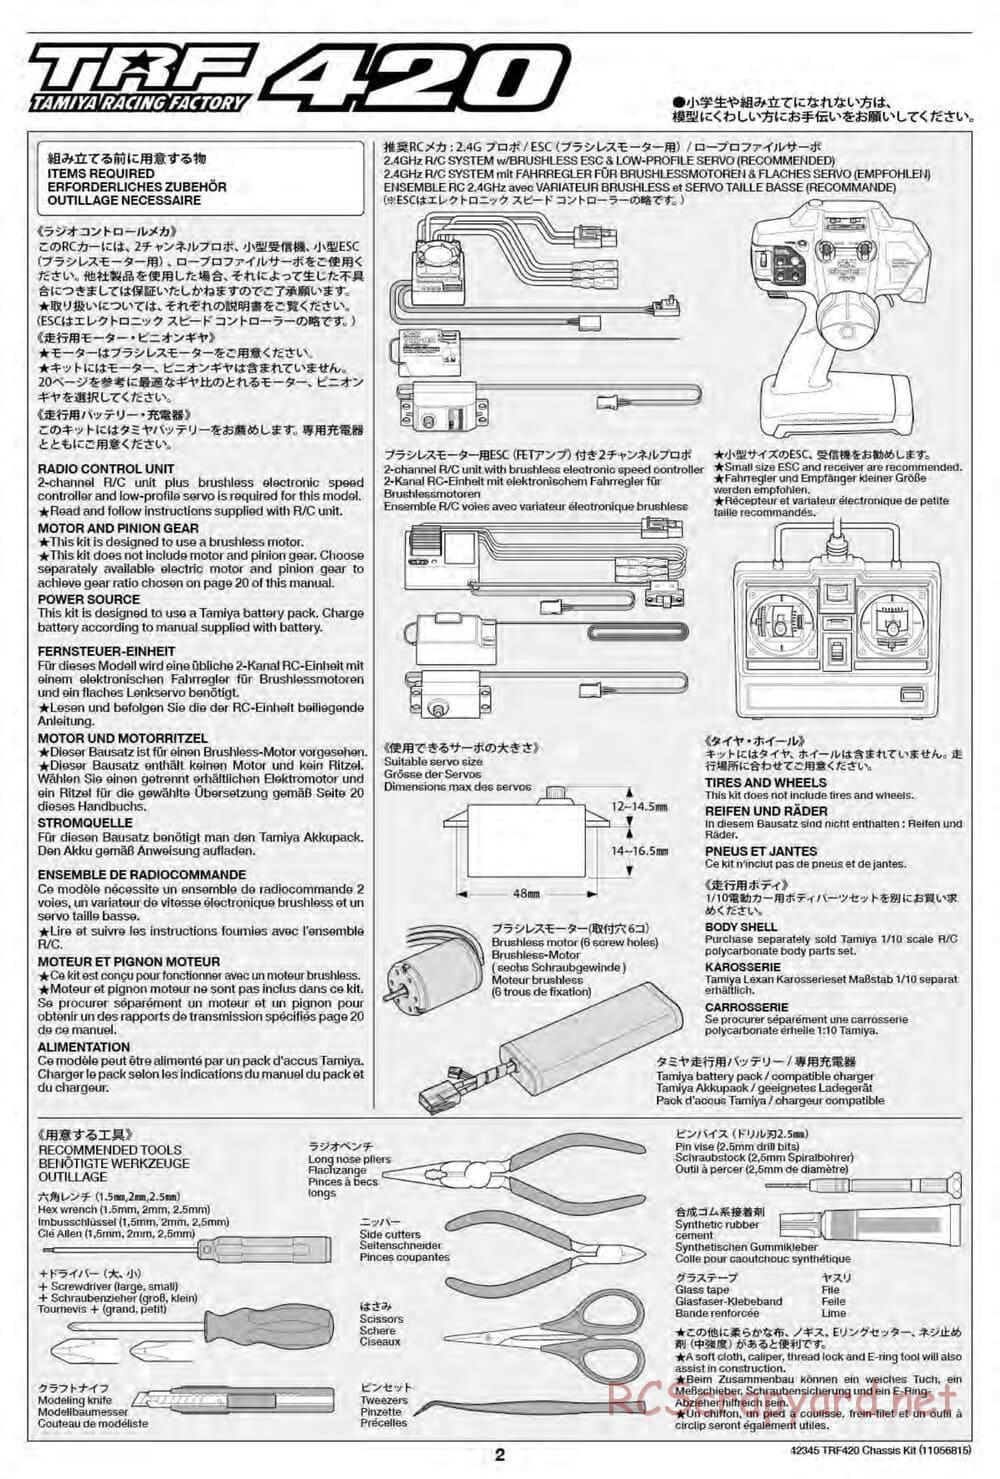 Tamiya - TRF420 Chassis - Manual - Page 2